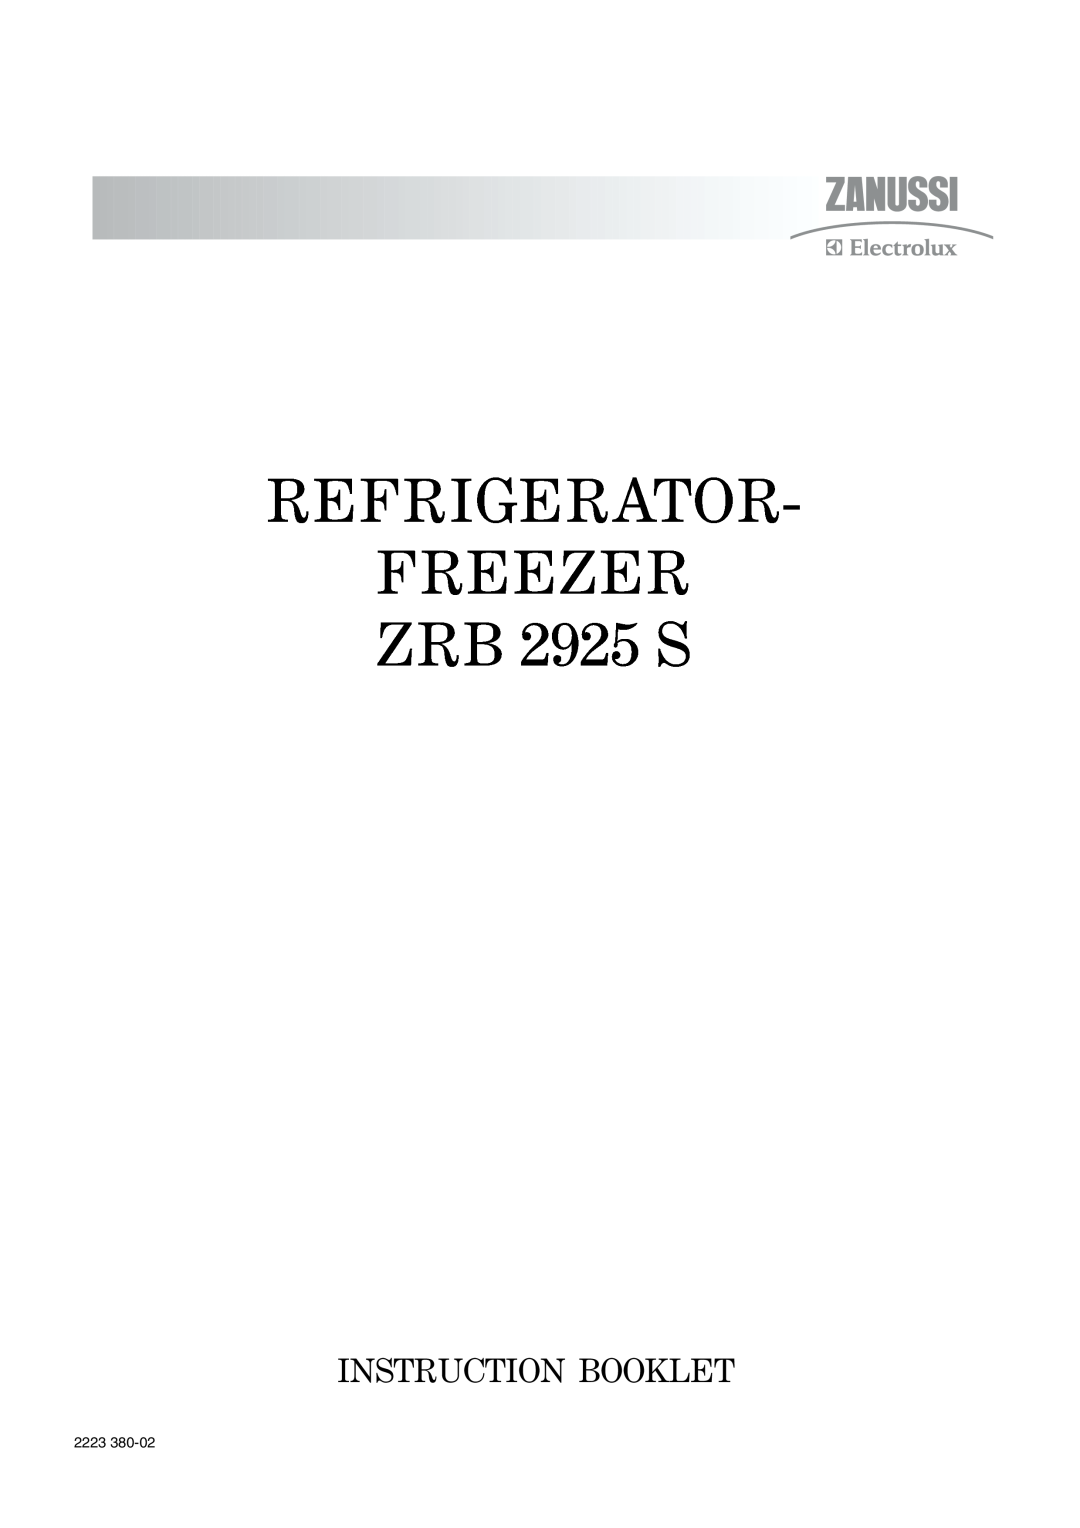 Zanussi manual REFRIGERATOR FREEZER ZRB 2925 S, Instruction Booklet, 2223 